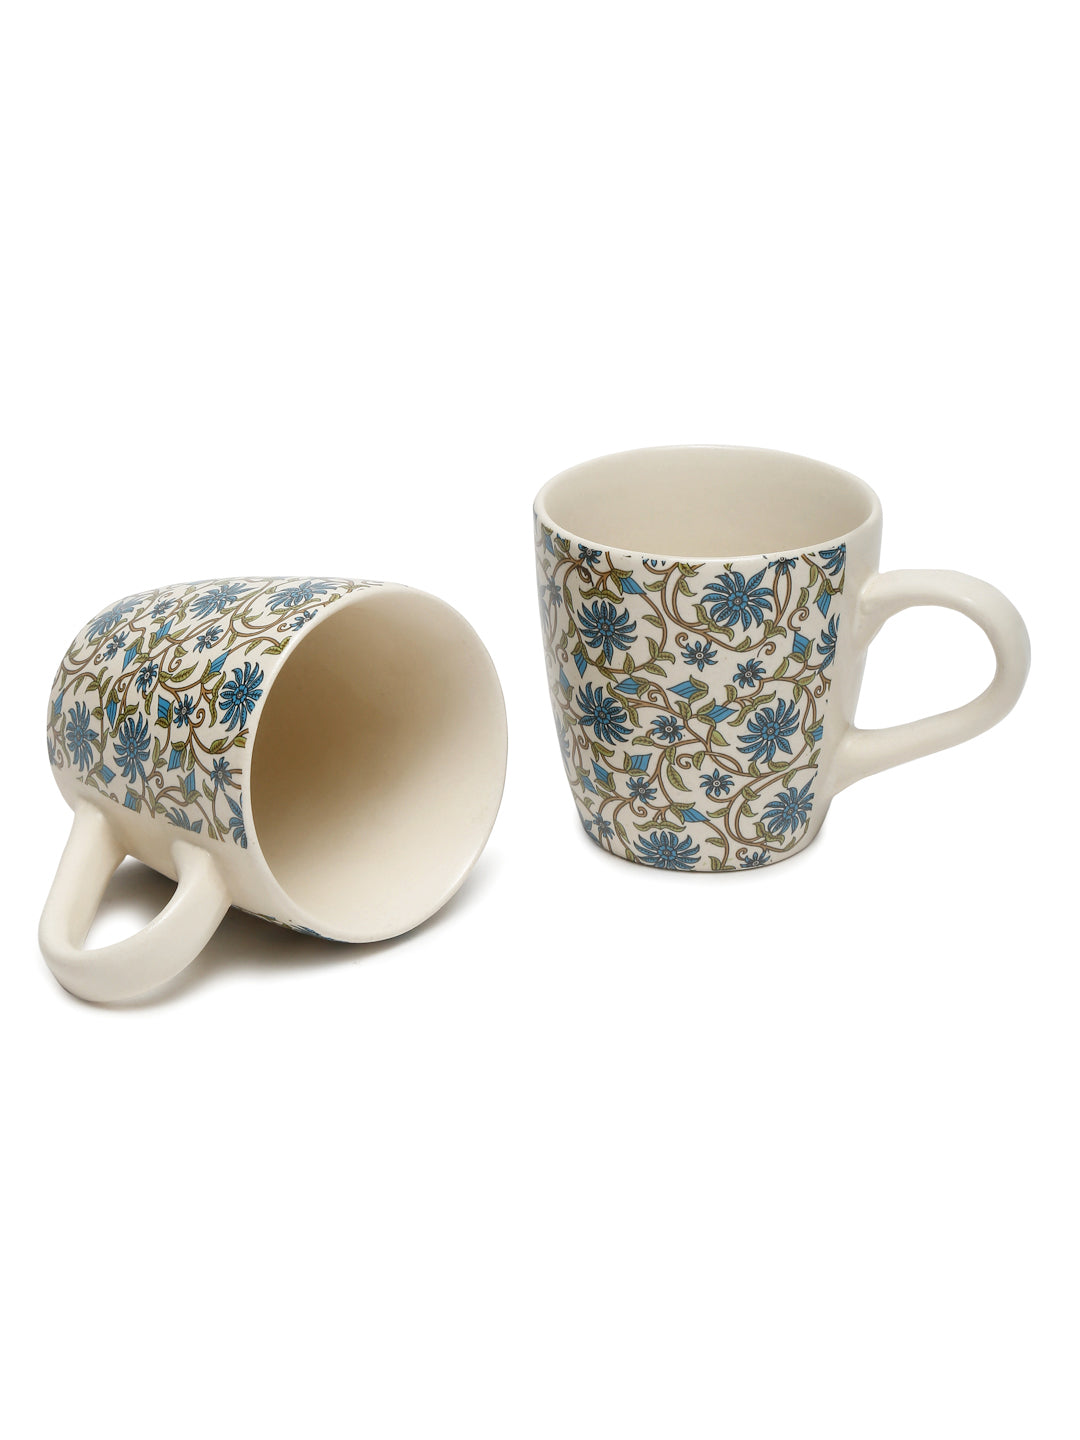 Arrabi Multi Handcrafted Printed Stoneware Matte Floral Tea set (Set of 6)